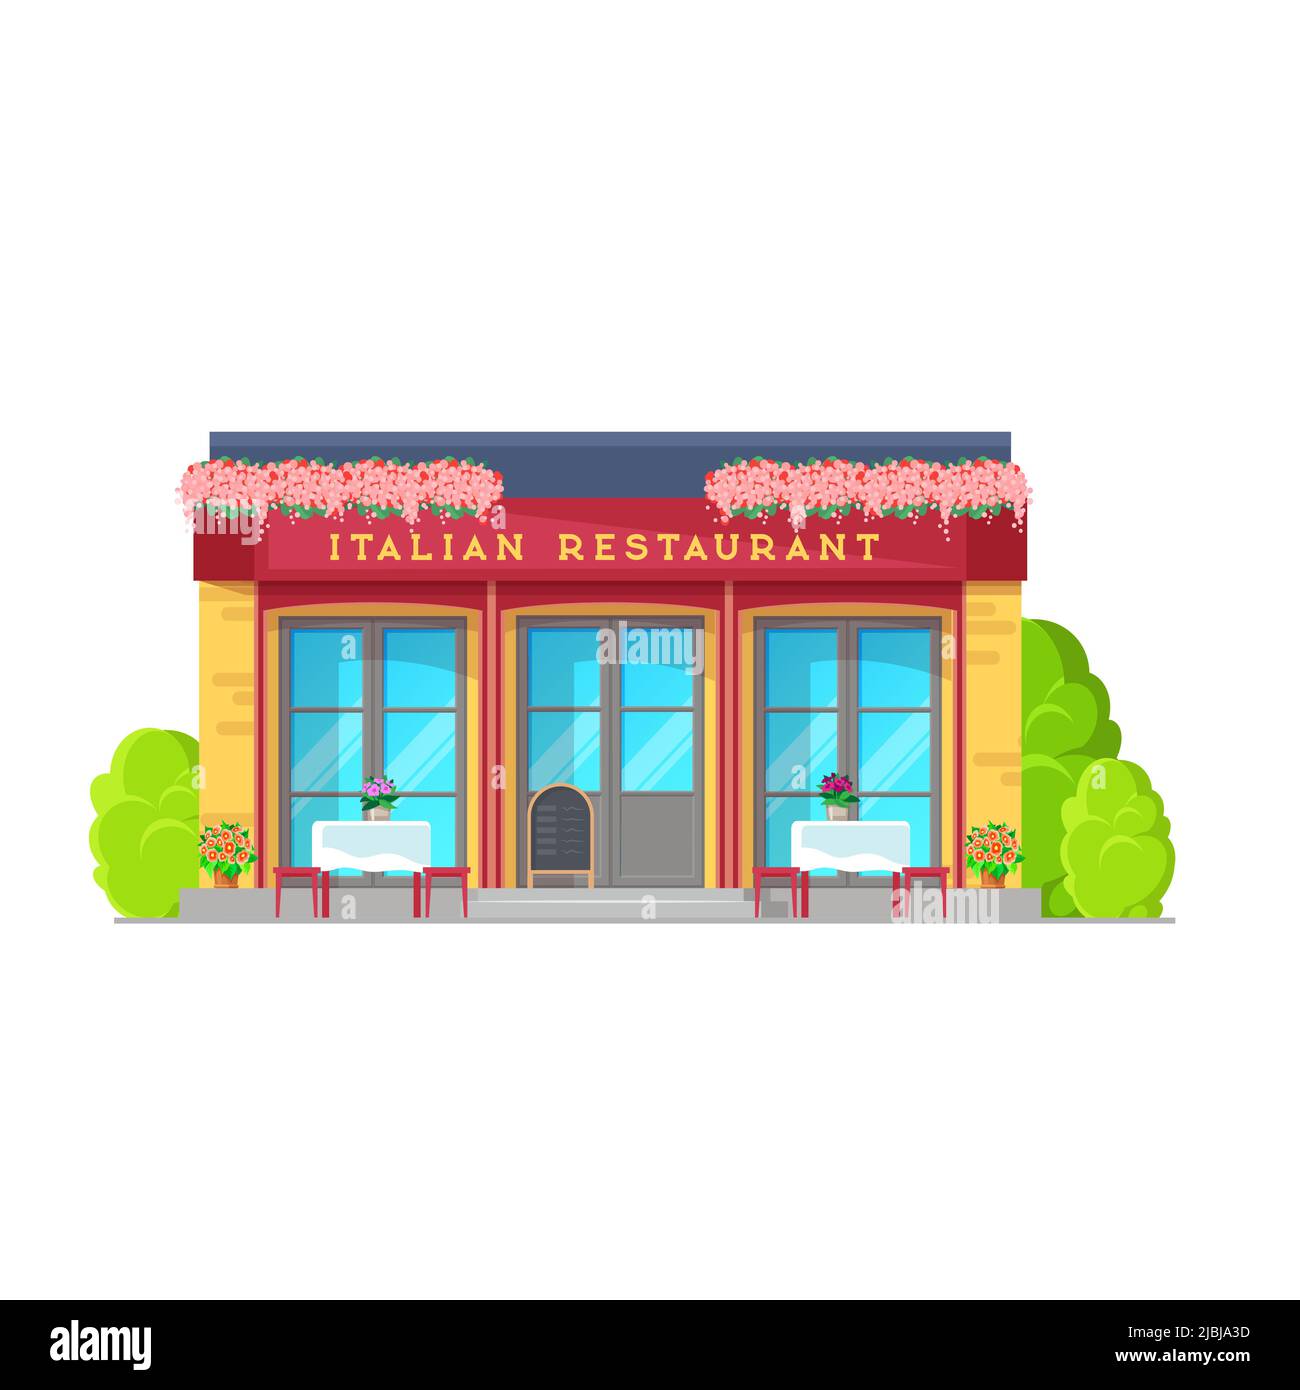 restaurant building cartoon